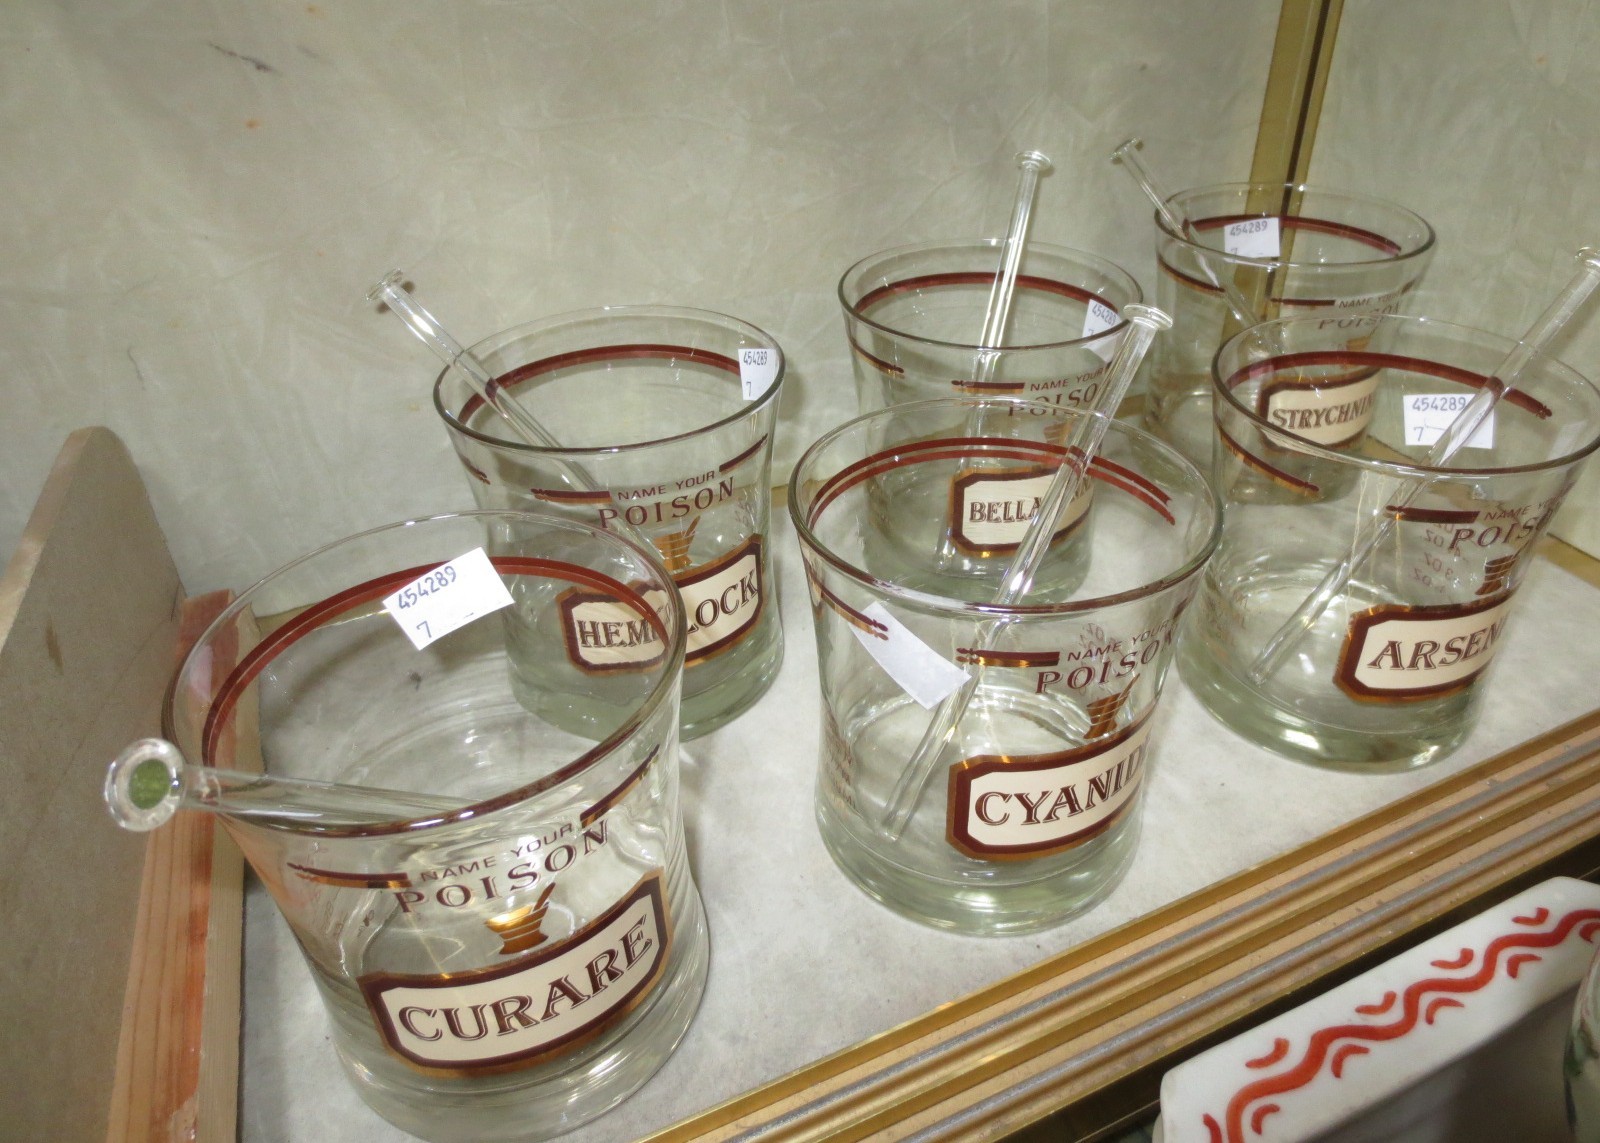 Six glass poison beakers with glass stirrers, Arsenic, Hemlock, Belladonna etc.